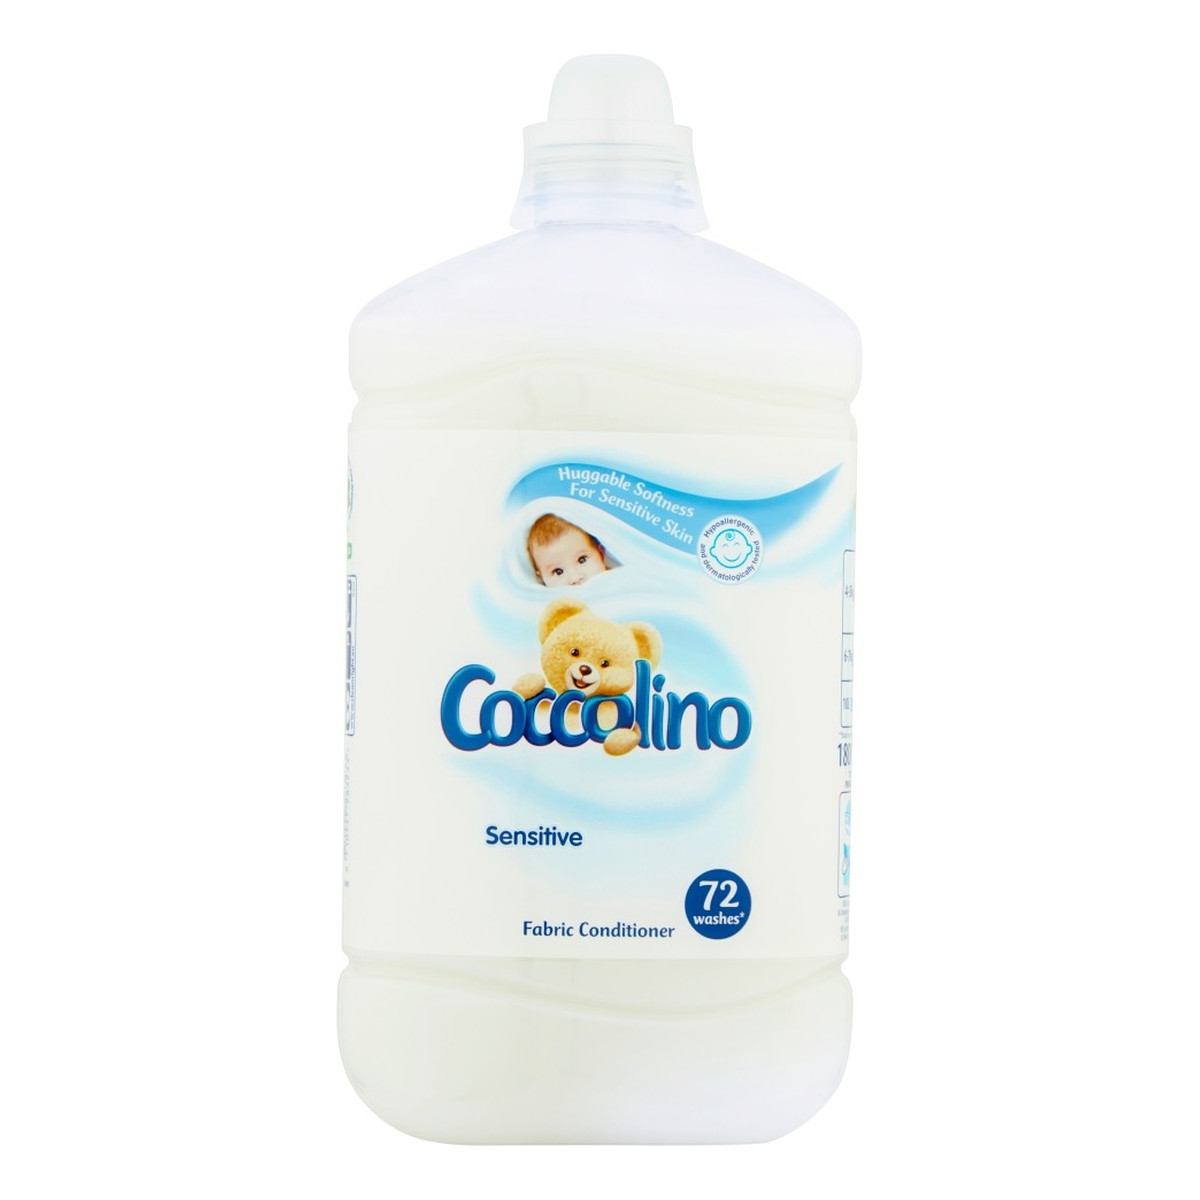 Coccolino Sensitive Płyn do płukania tkanin koncentrat (72 prania) 1800ml